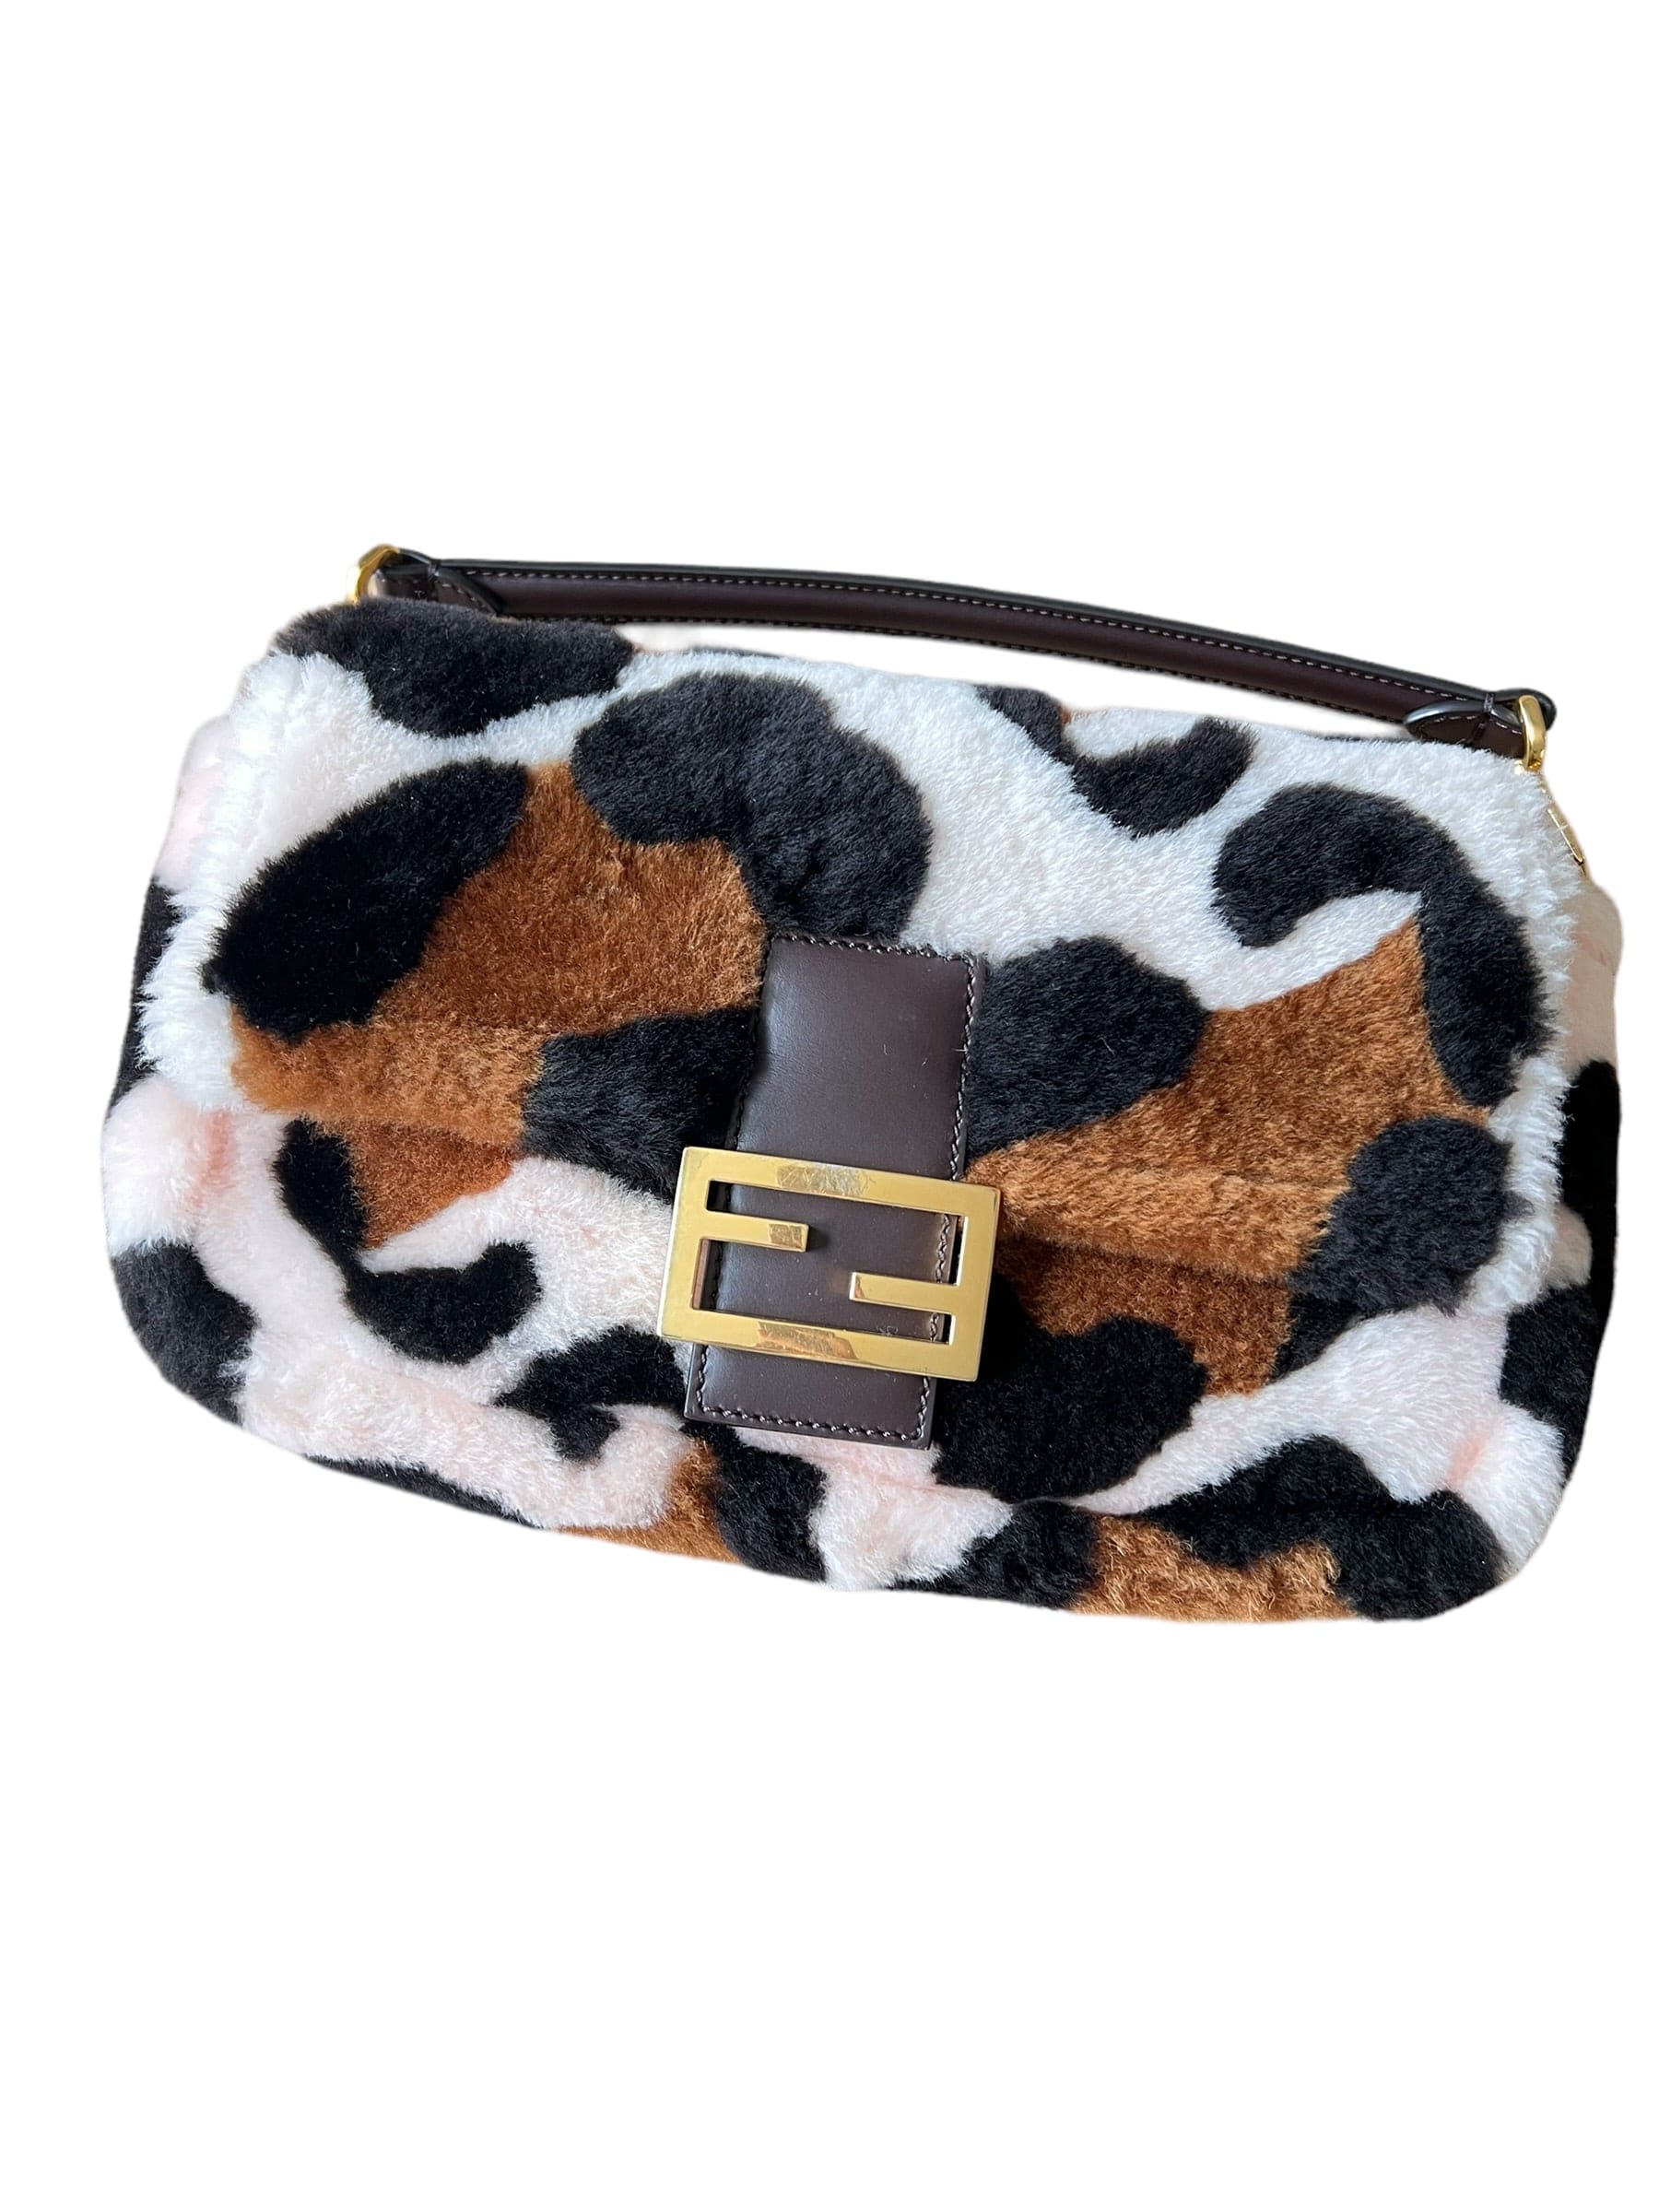 Fendi Fendi Shearling Leopard Baguette Bag UKL1417